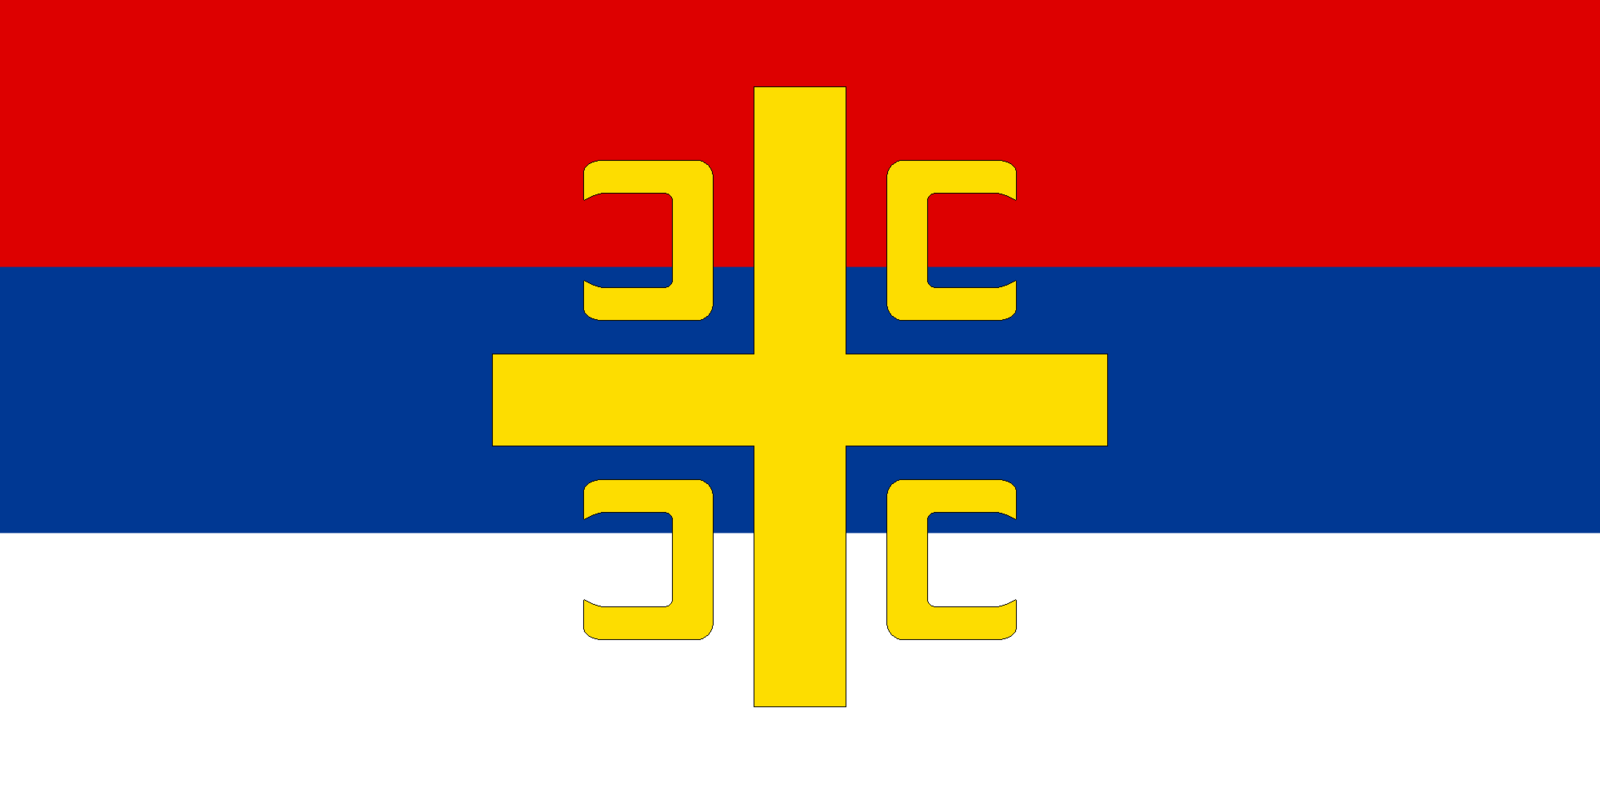 Республика сербская флаг. Флаг Республики сербской. Республика Српска флаг. Флаг сербской краины. Республика Сербская Флан.